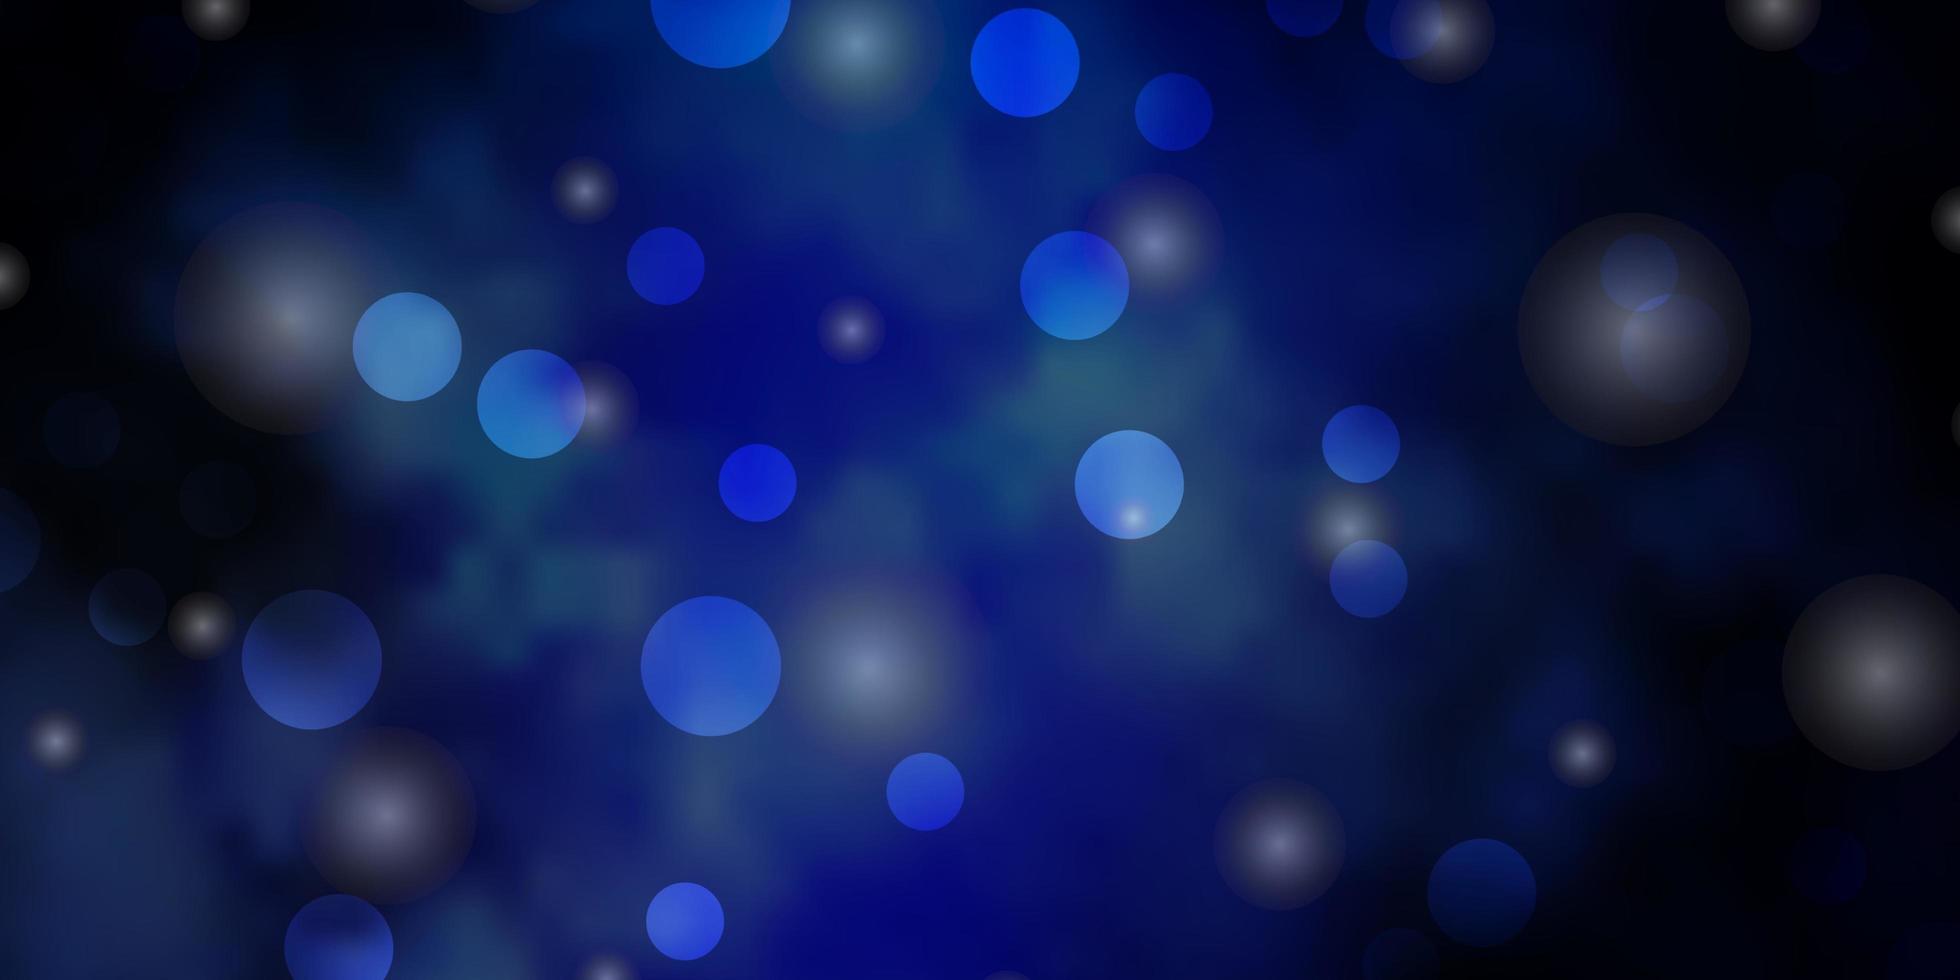 modelo de vetor azul escuro com círculos, estrelas.